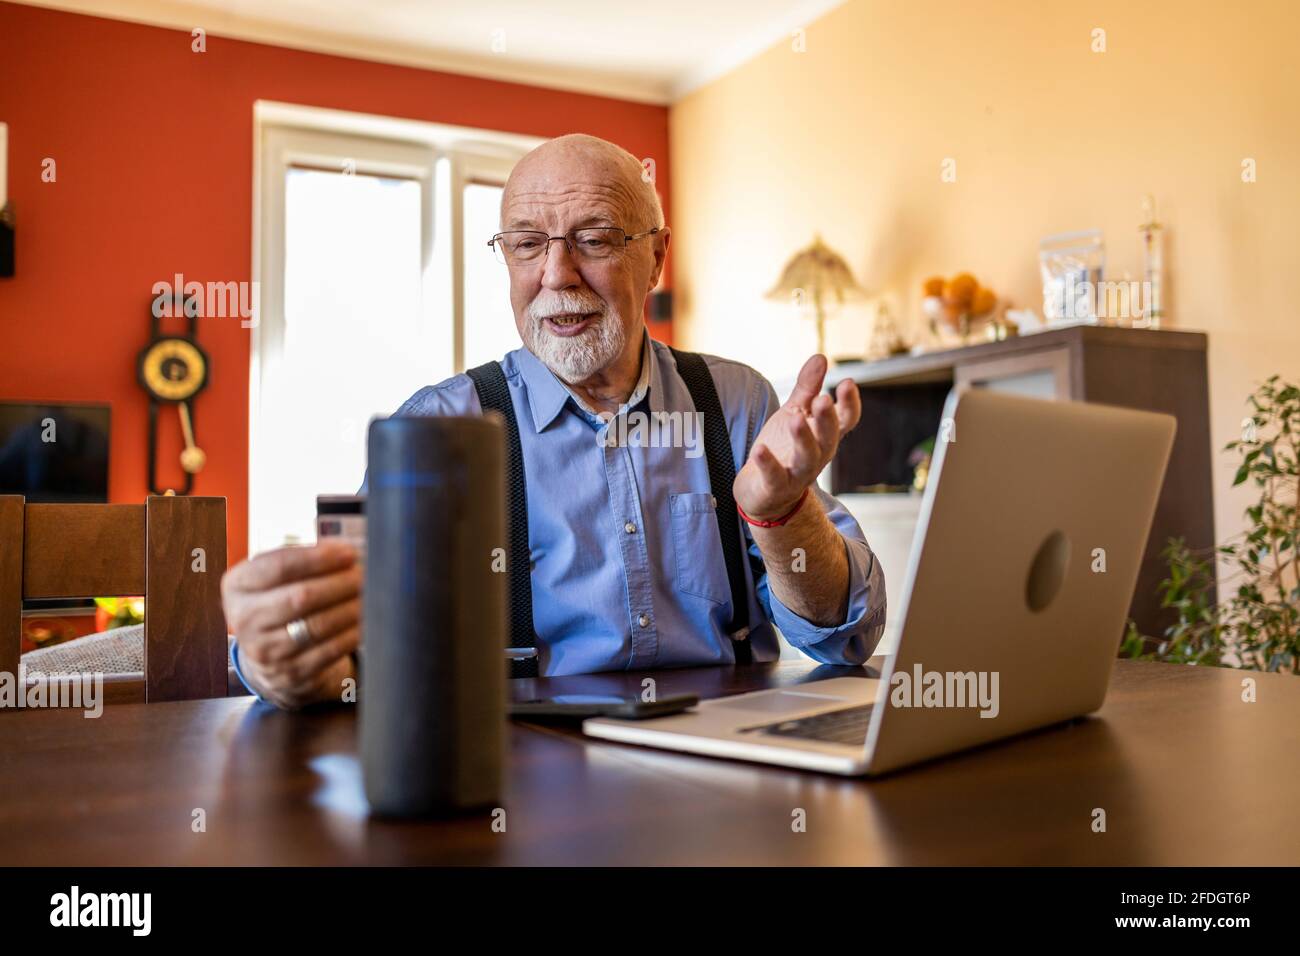 Senior man using Virtual Assistant at home Stock Photo